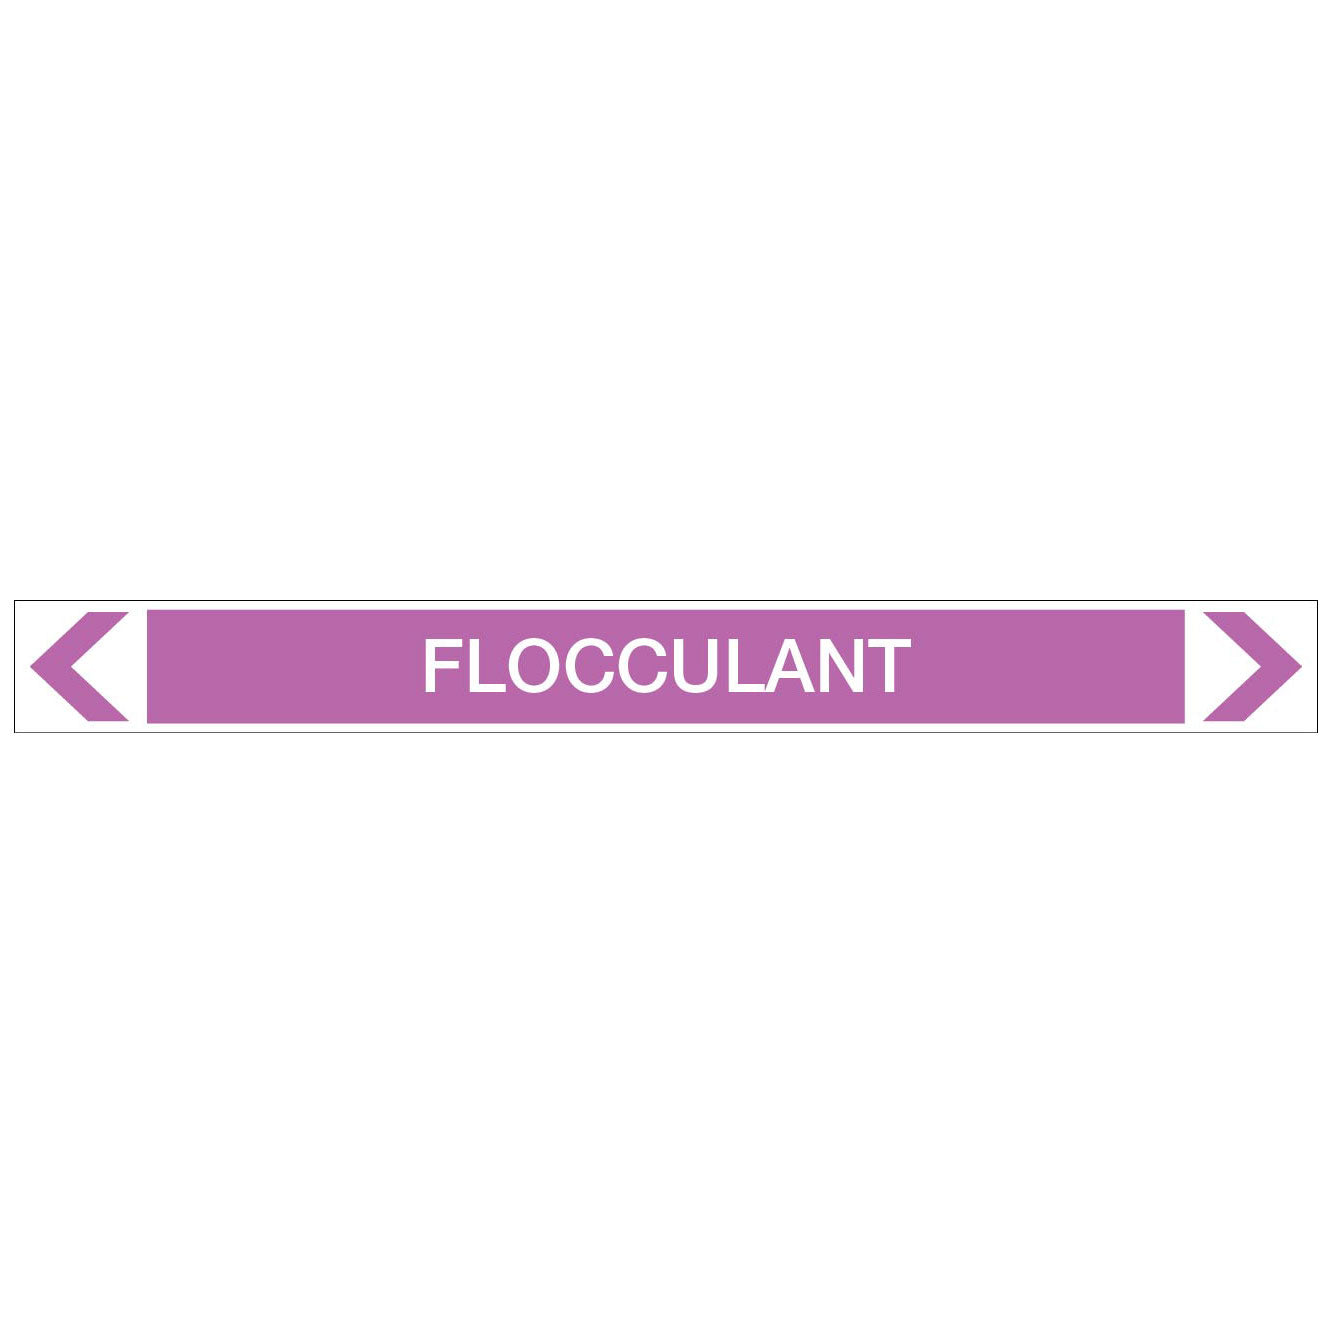 Alkalis / Acids - Flocculant - Pipe Marker Sticker